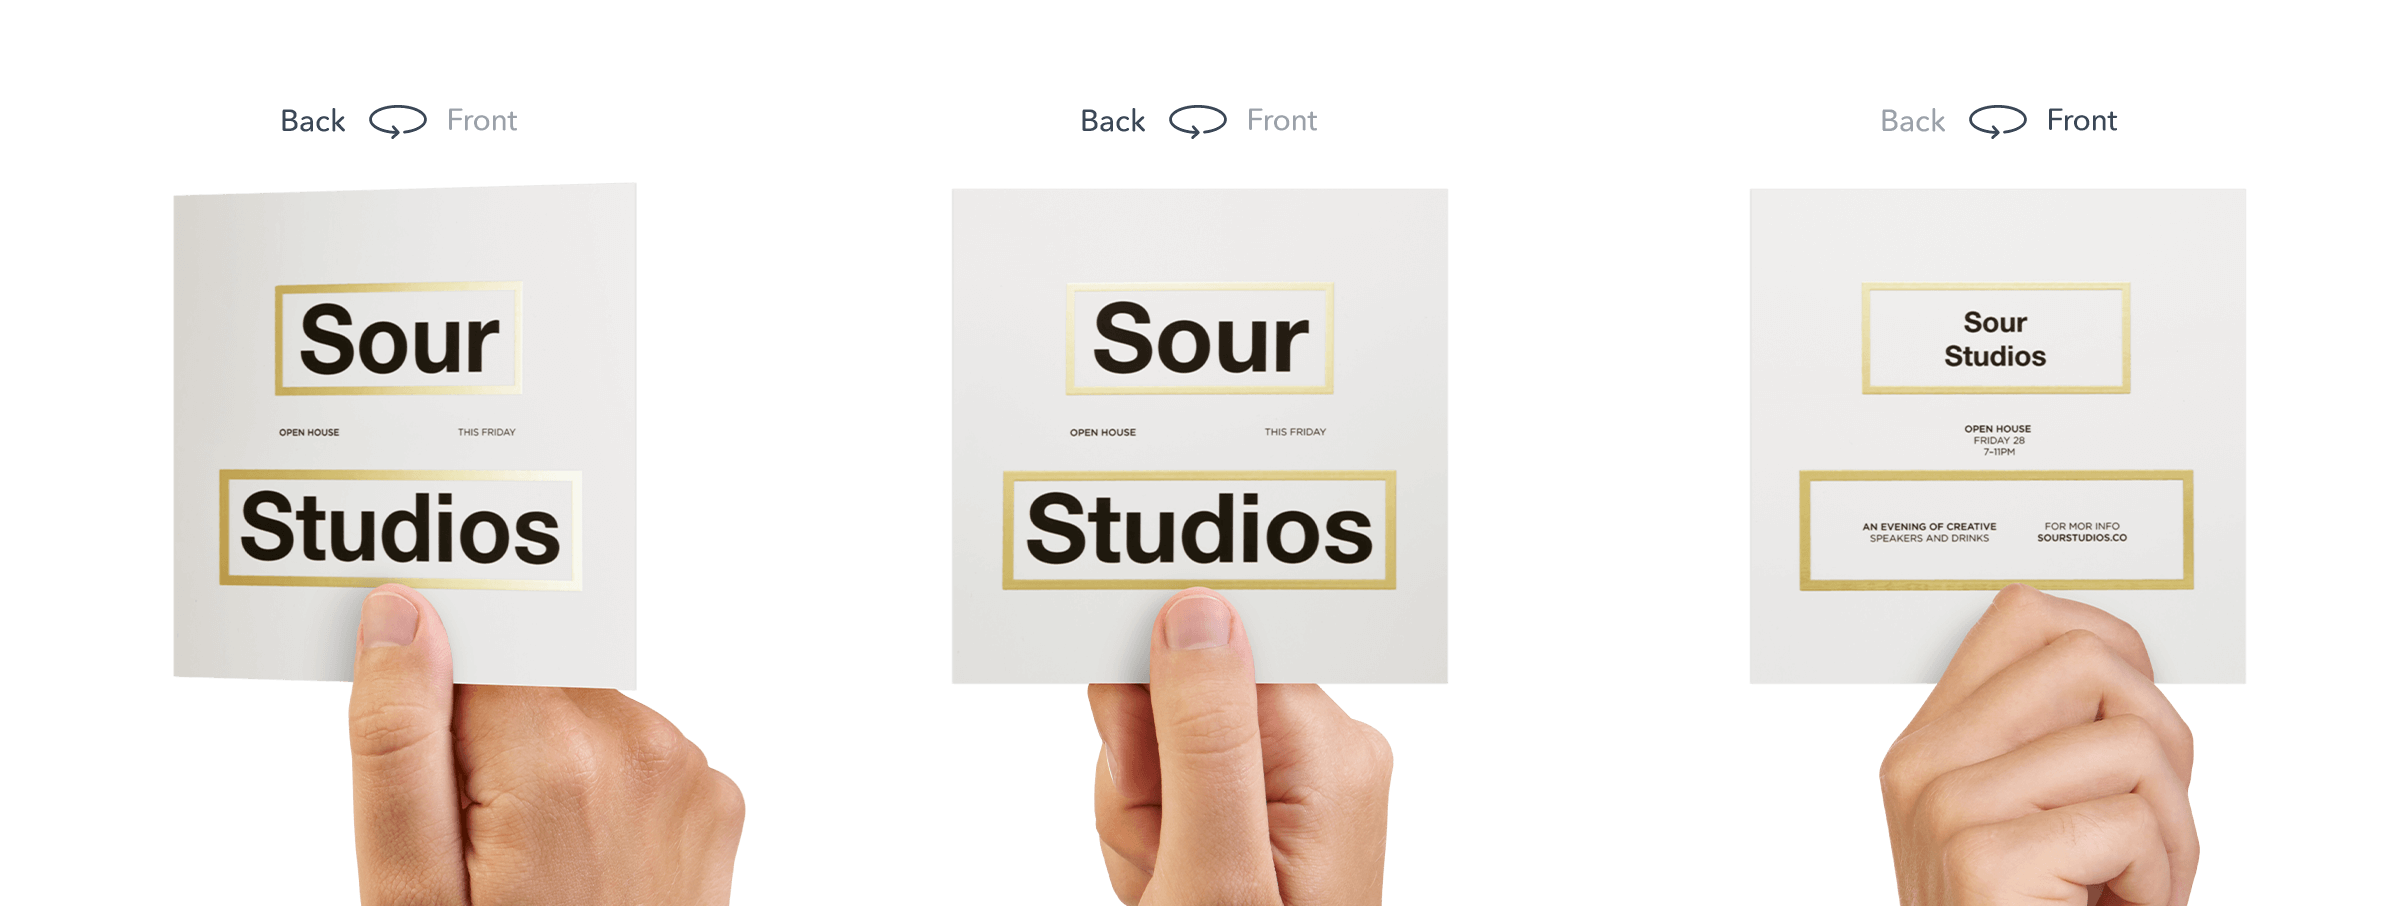 Square Postcards | Design and print Square Postcards online | MOO US